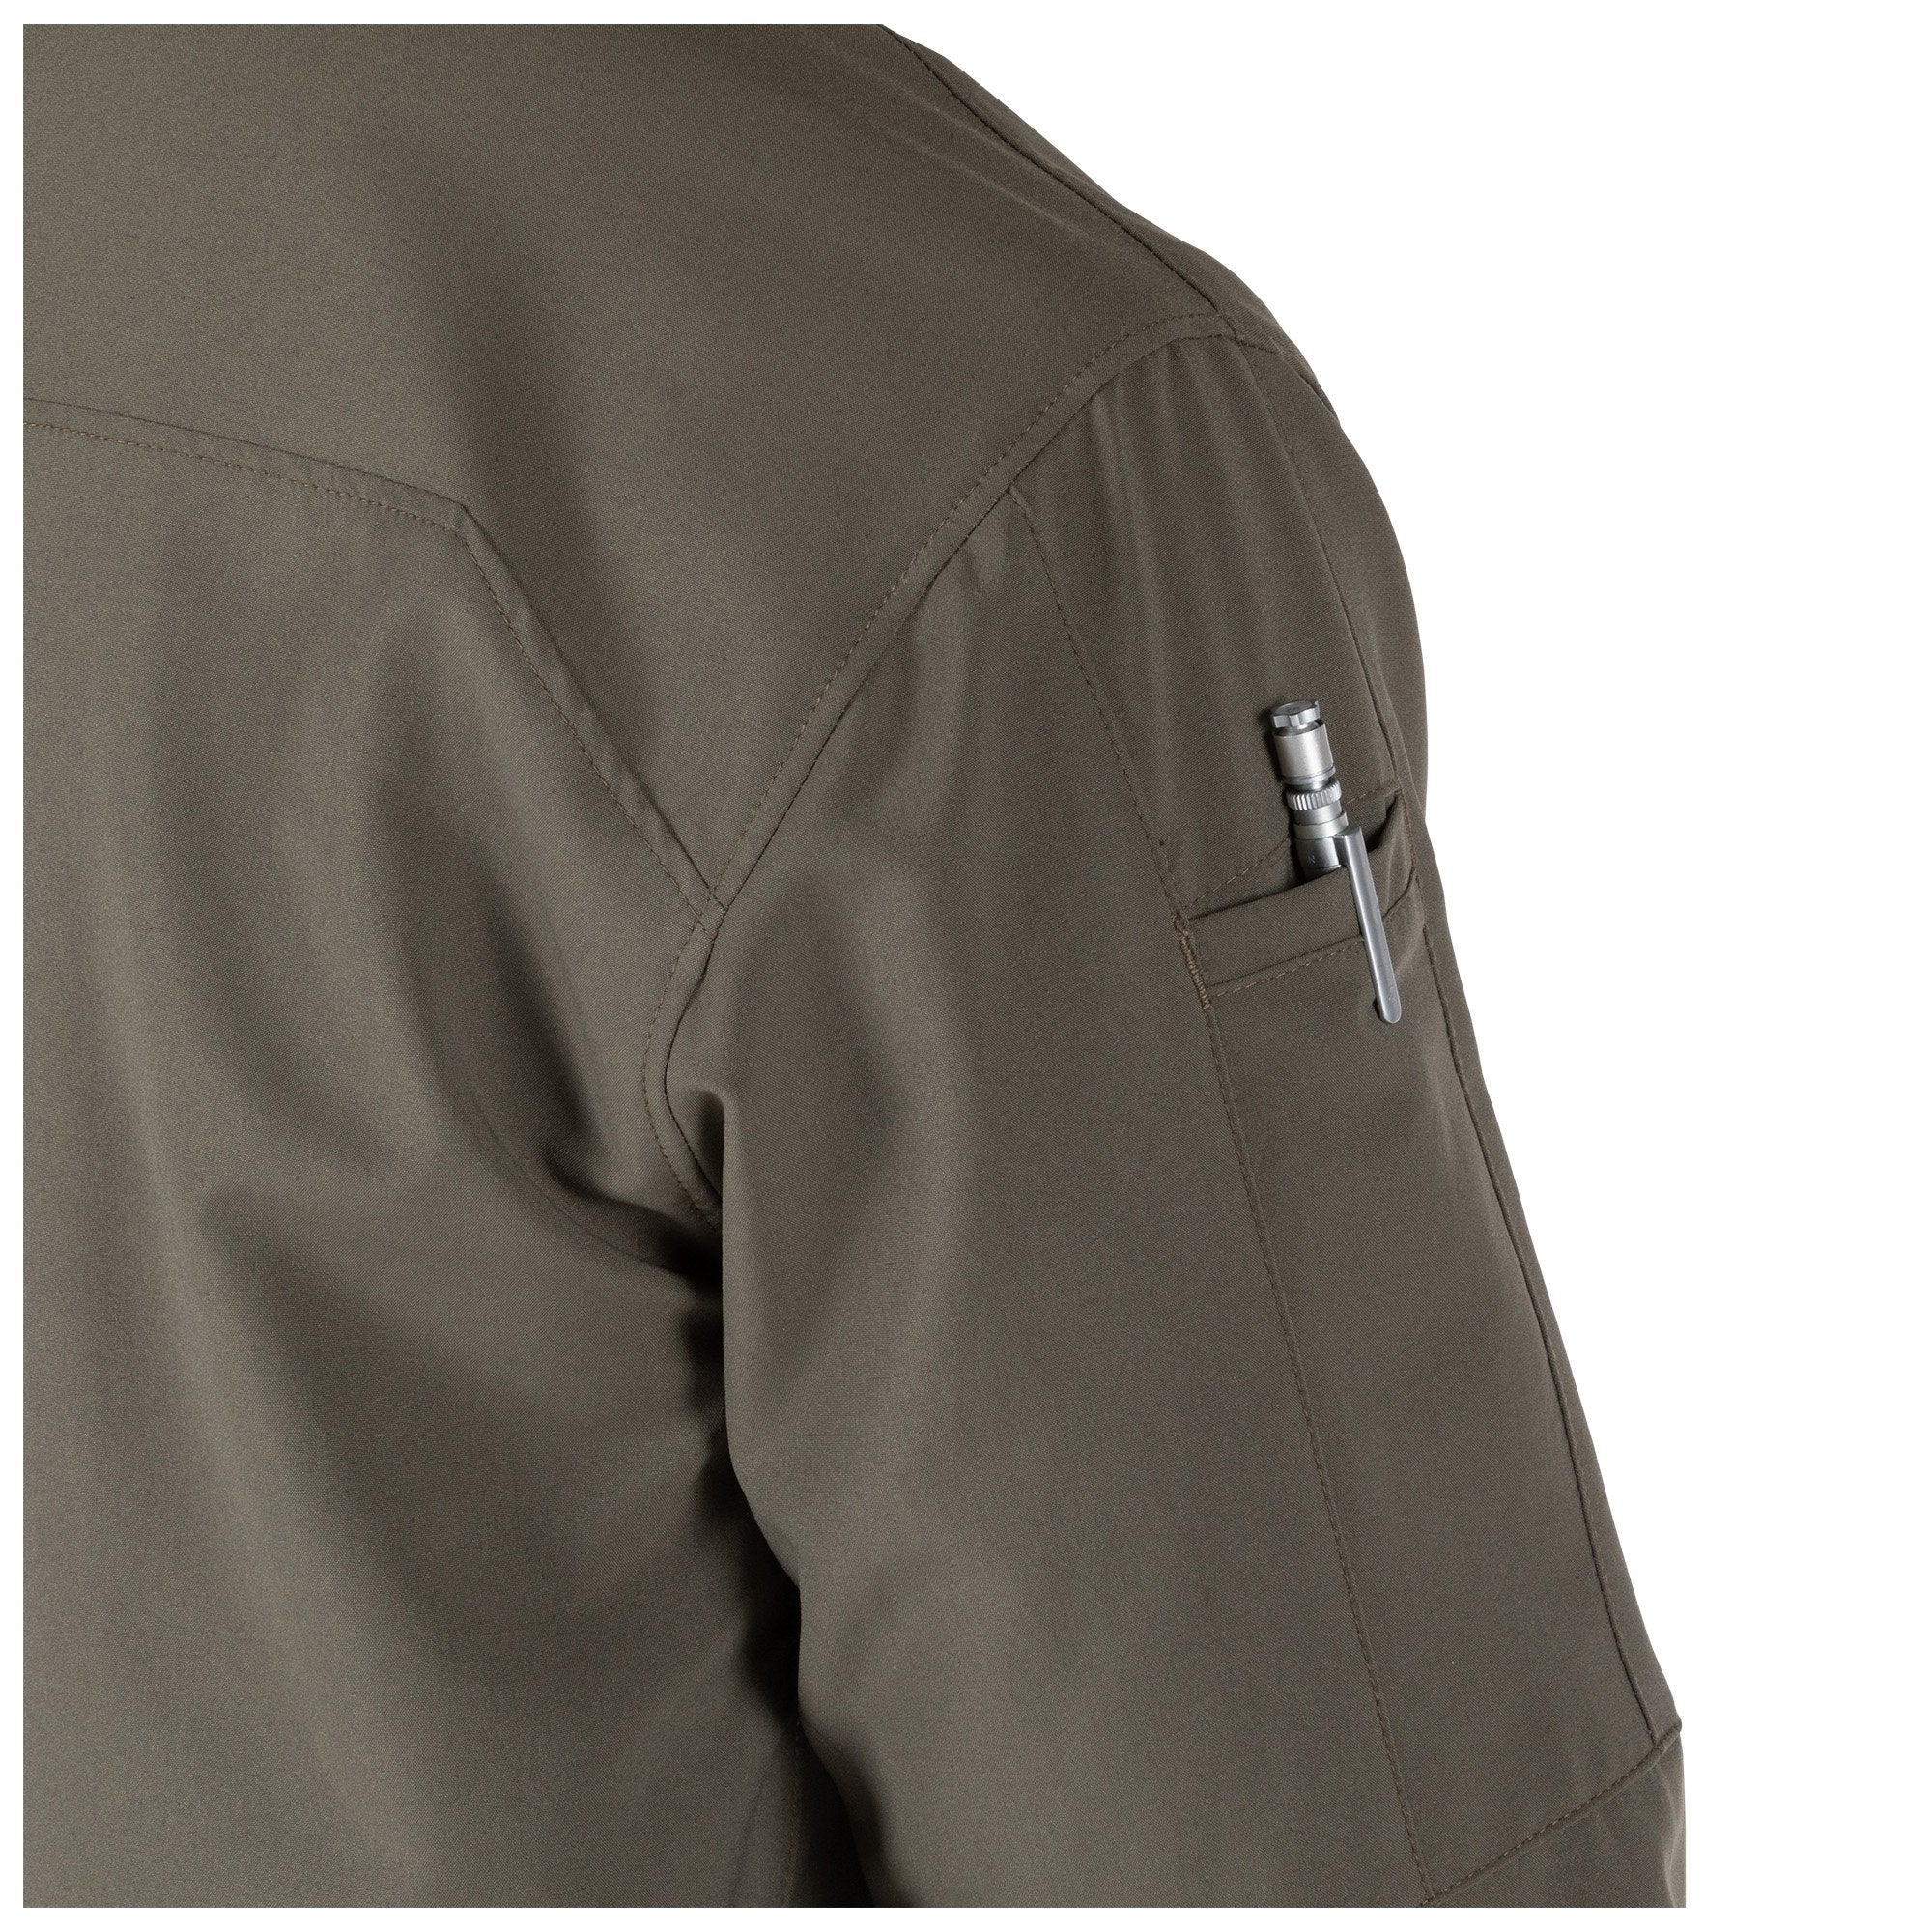 5.11 Freedom Flex Woven Long Sleeve Shirt Sage Green Shirts 5.11 Tactical Tactical Gear Supplier Tactical Distributors Australia